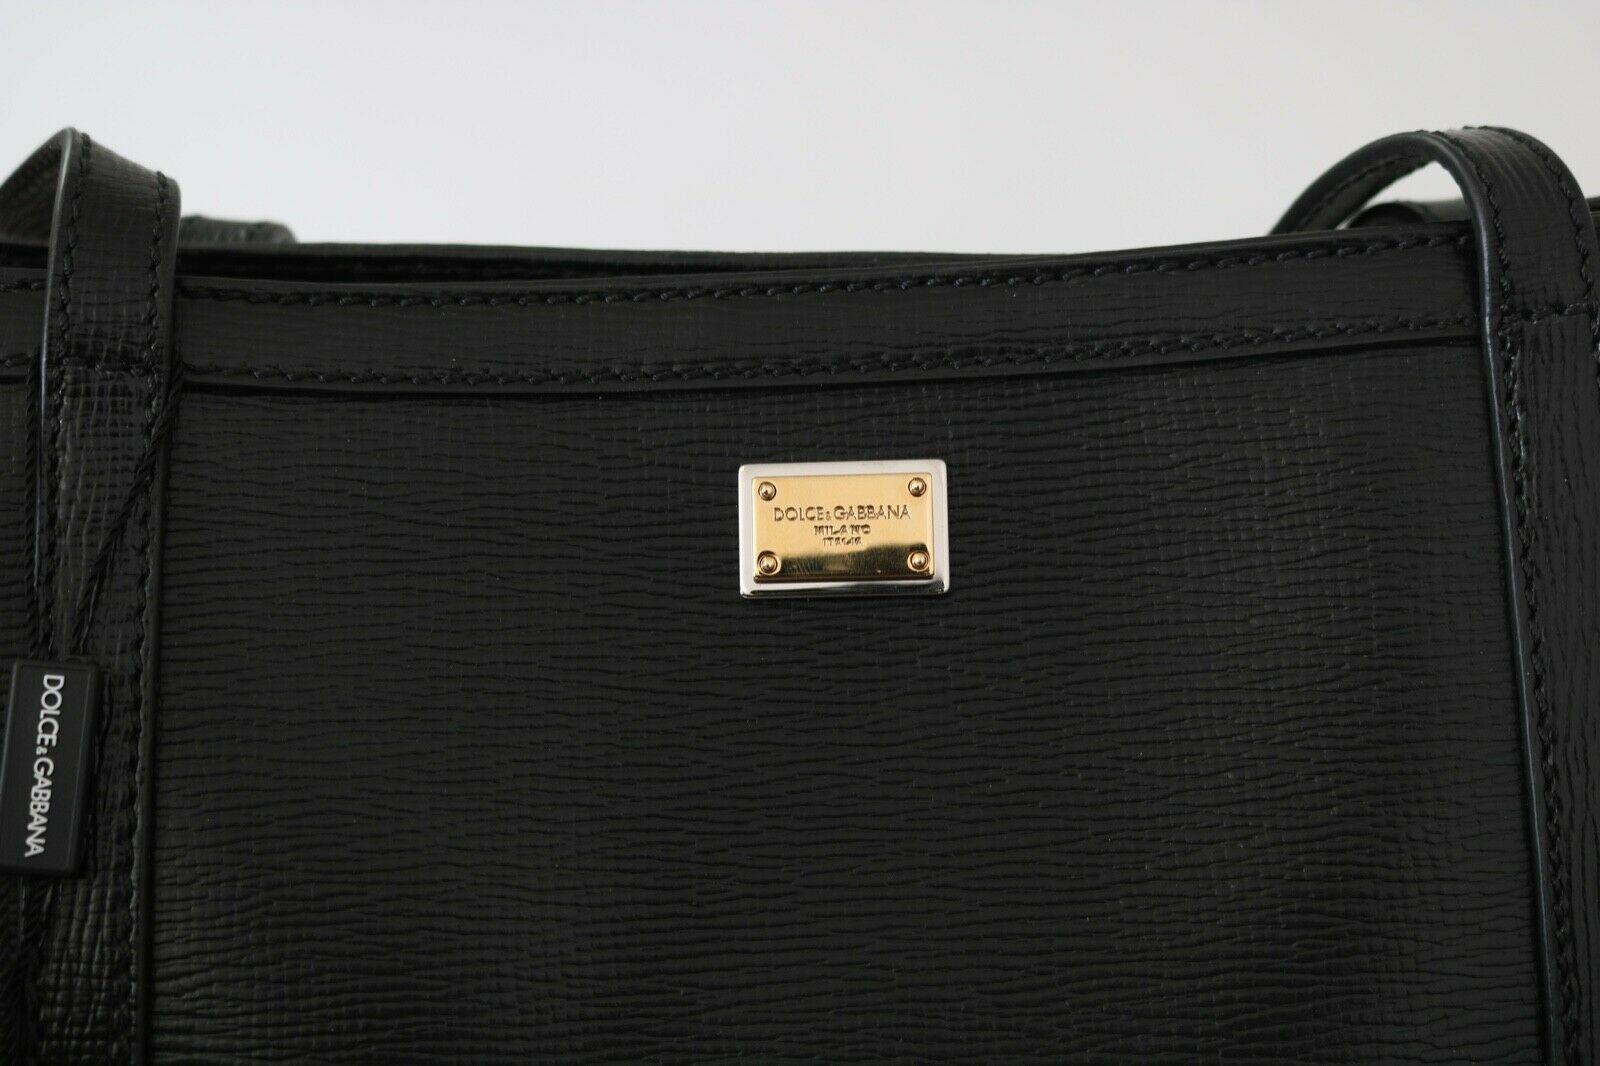 Dolce & Gabbana Black Leather Shopping Tote Bag Handbag Top Handle Bag 3